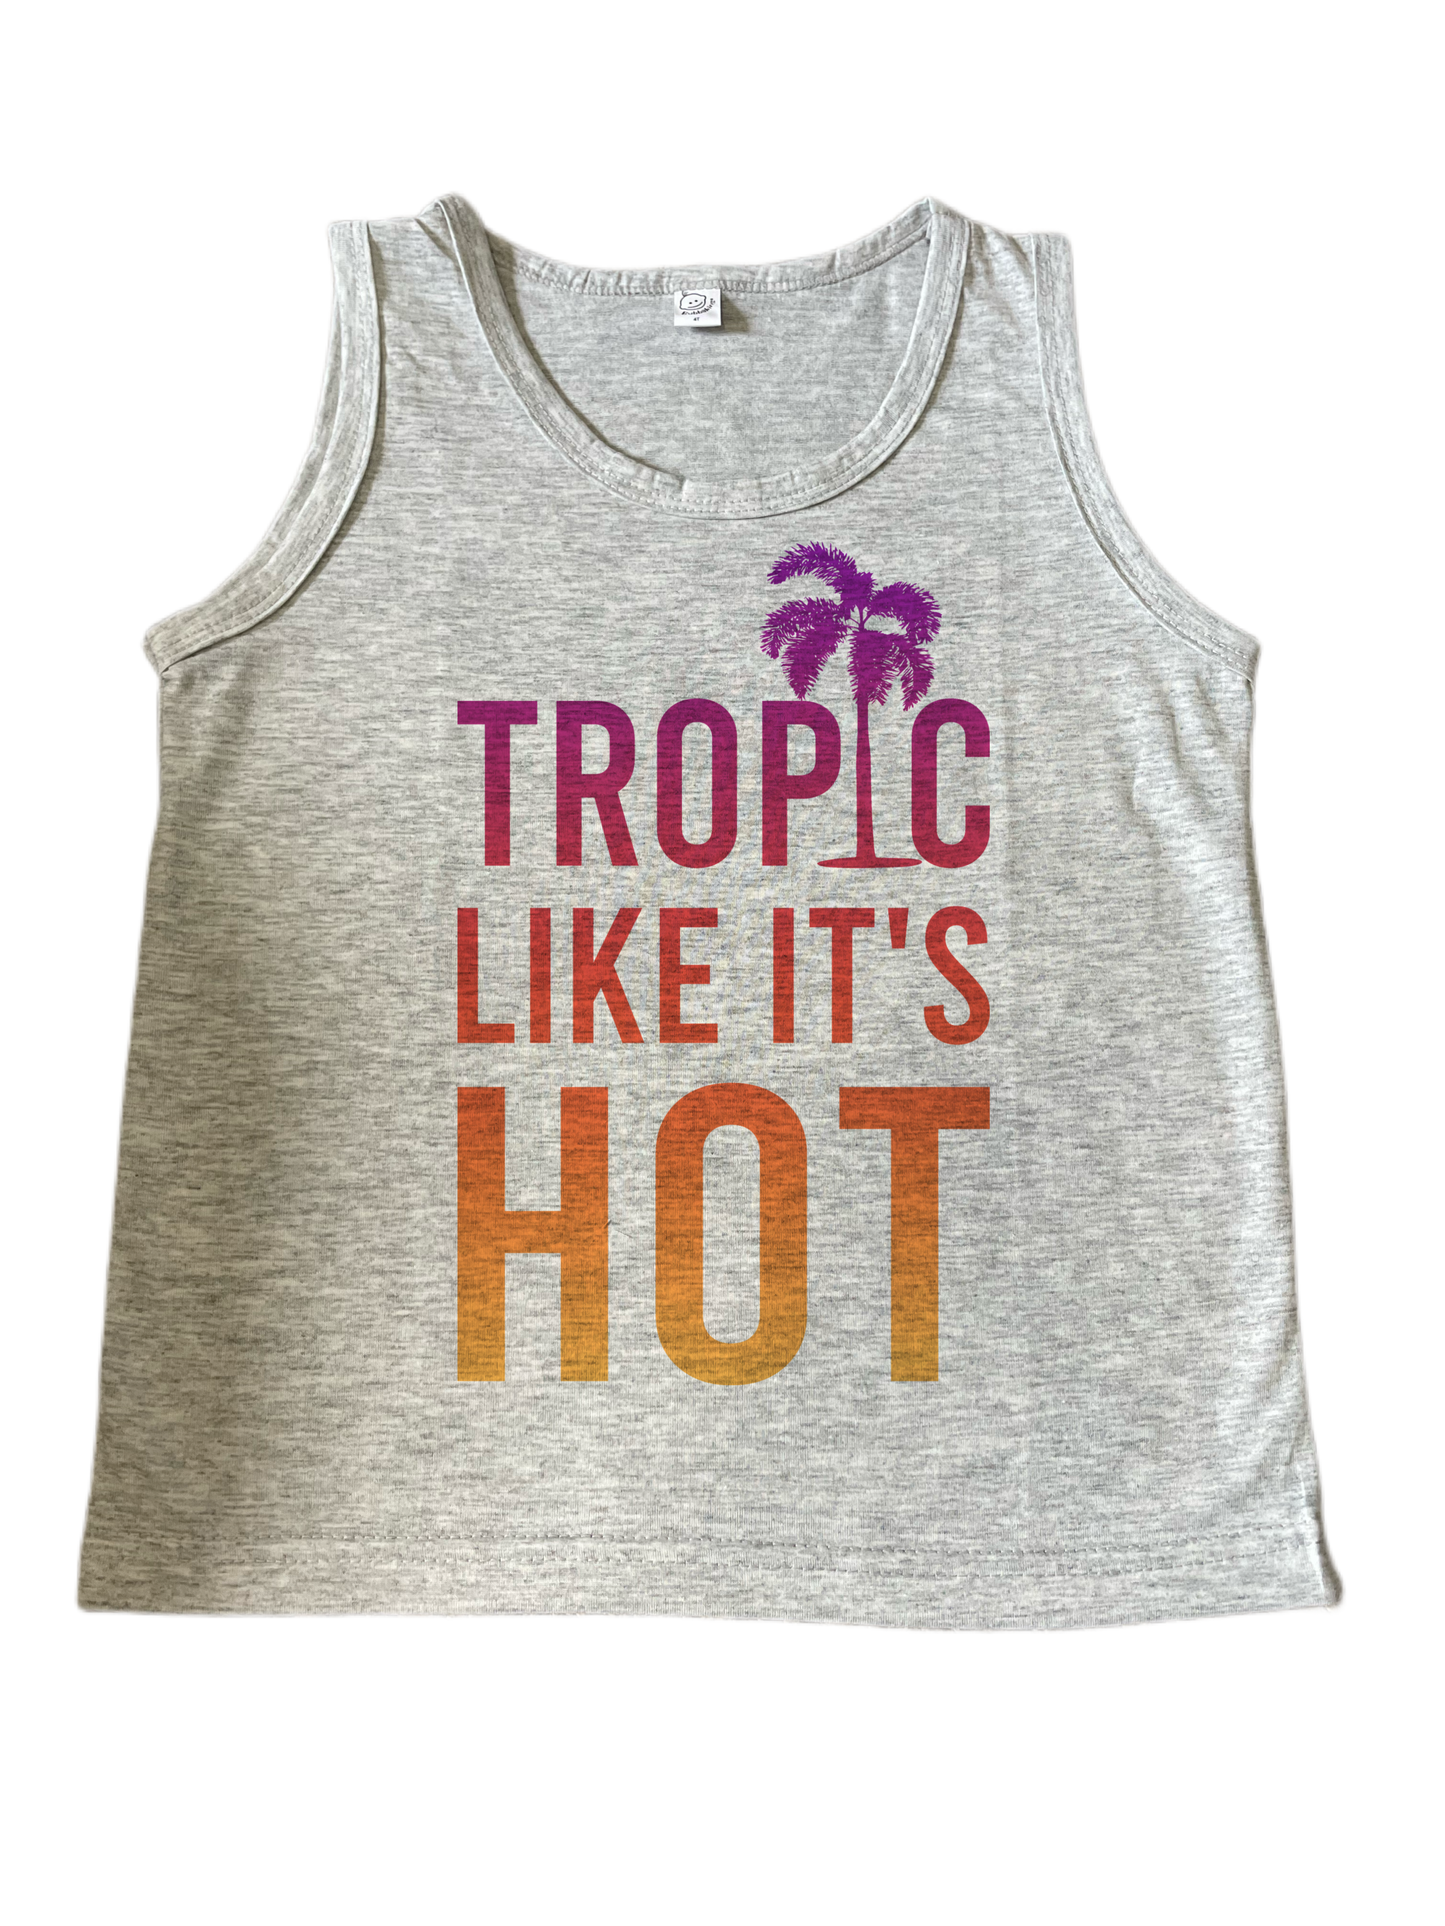 Tropic likes it hot